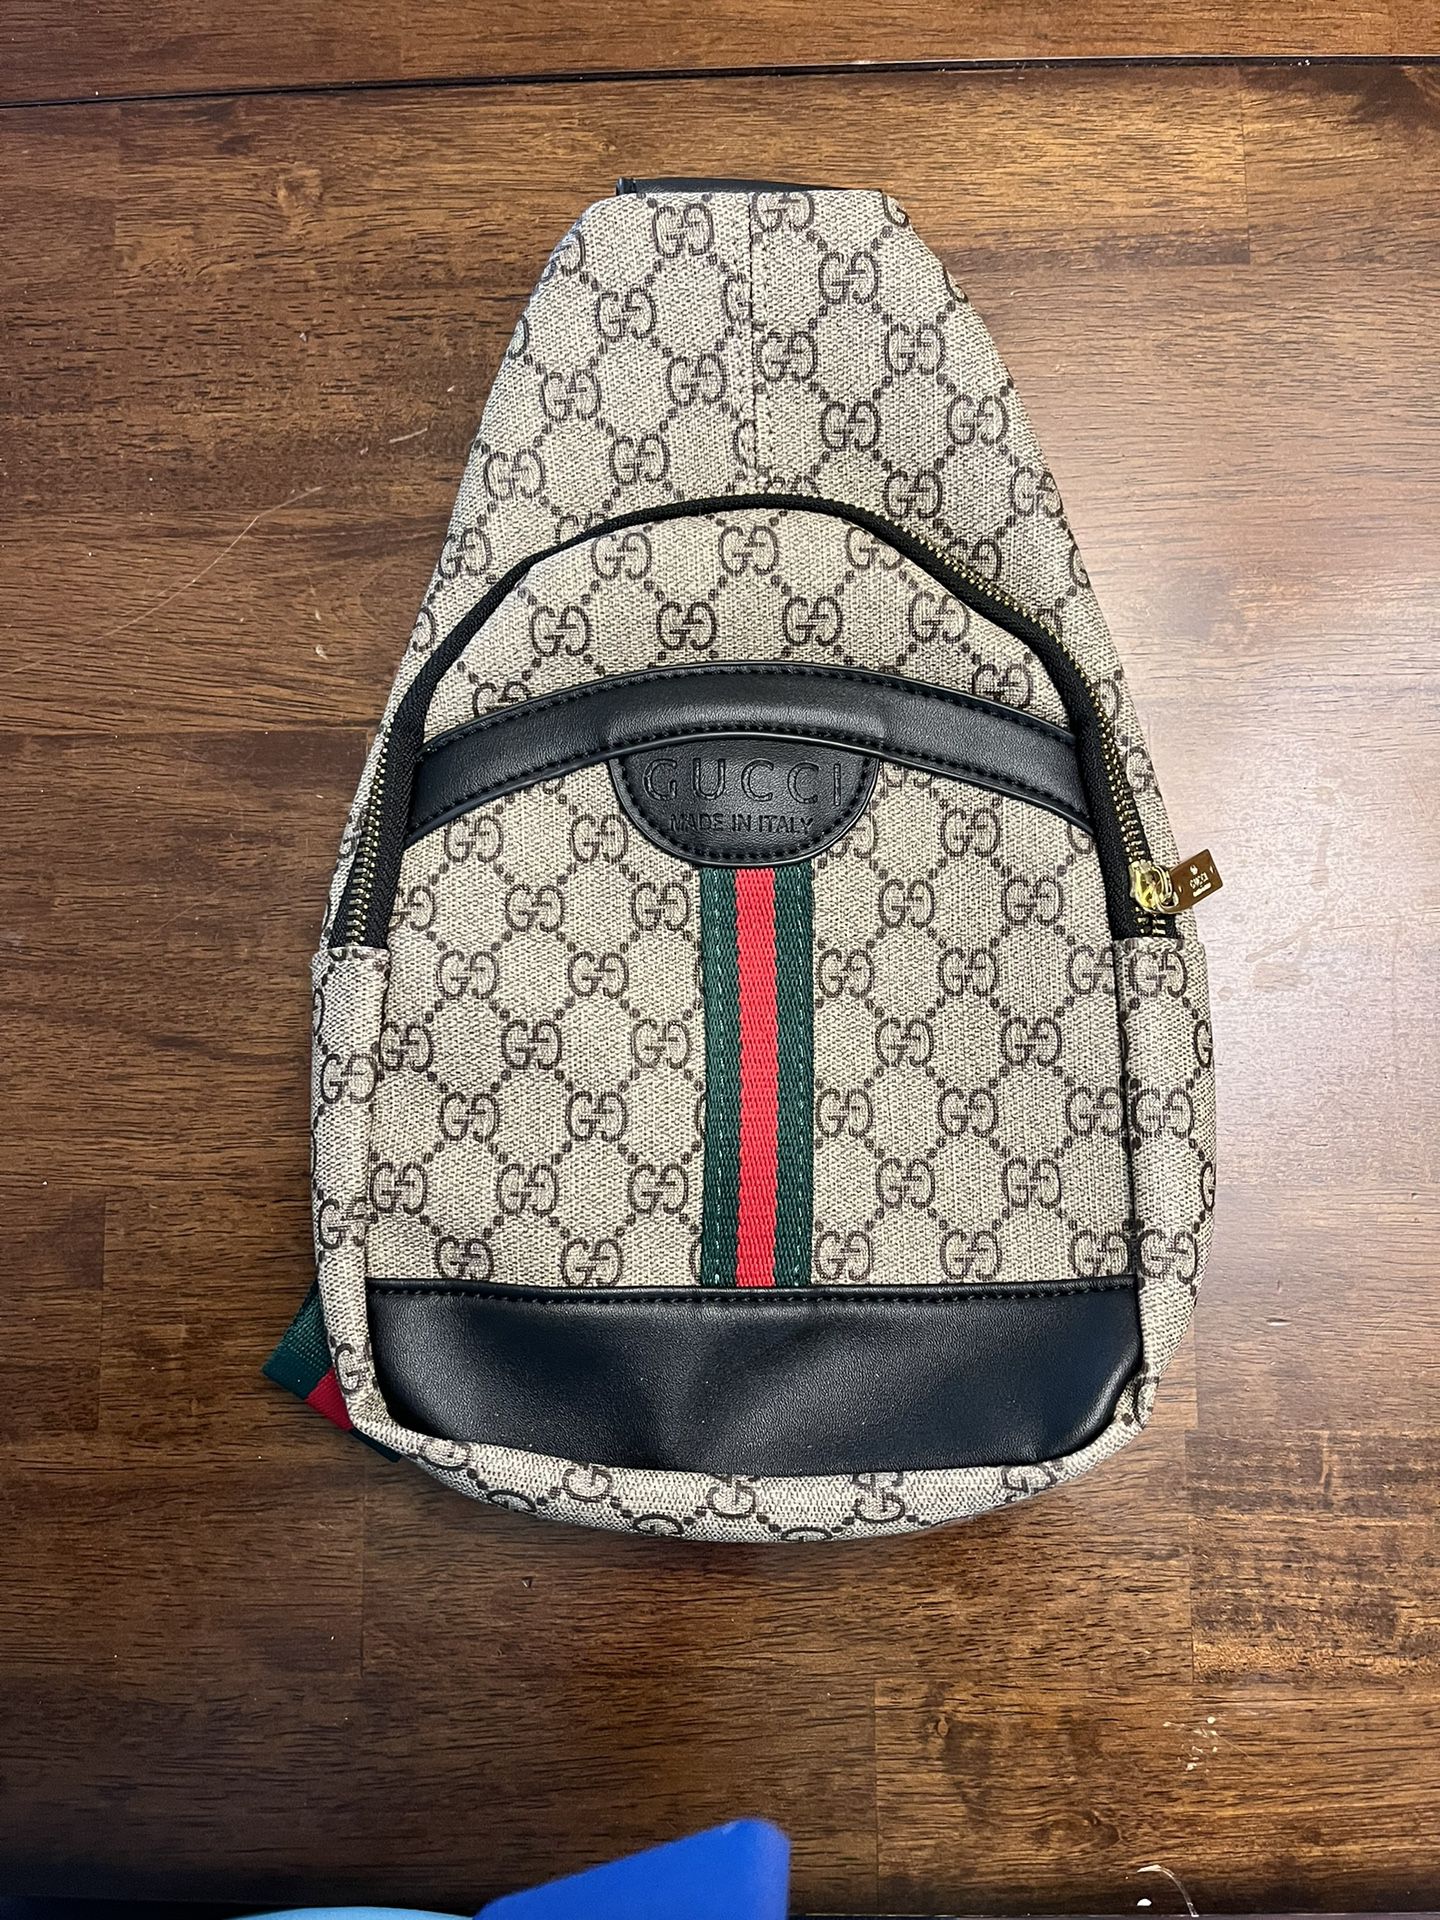 Gucci Cross Over Bag